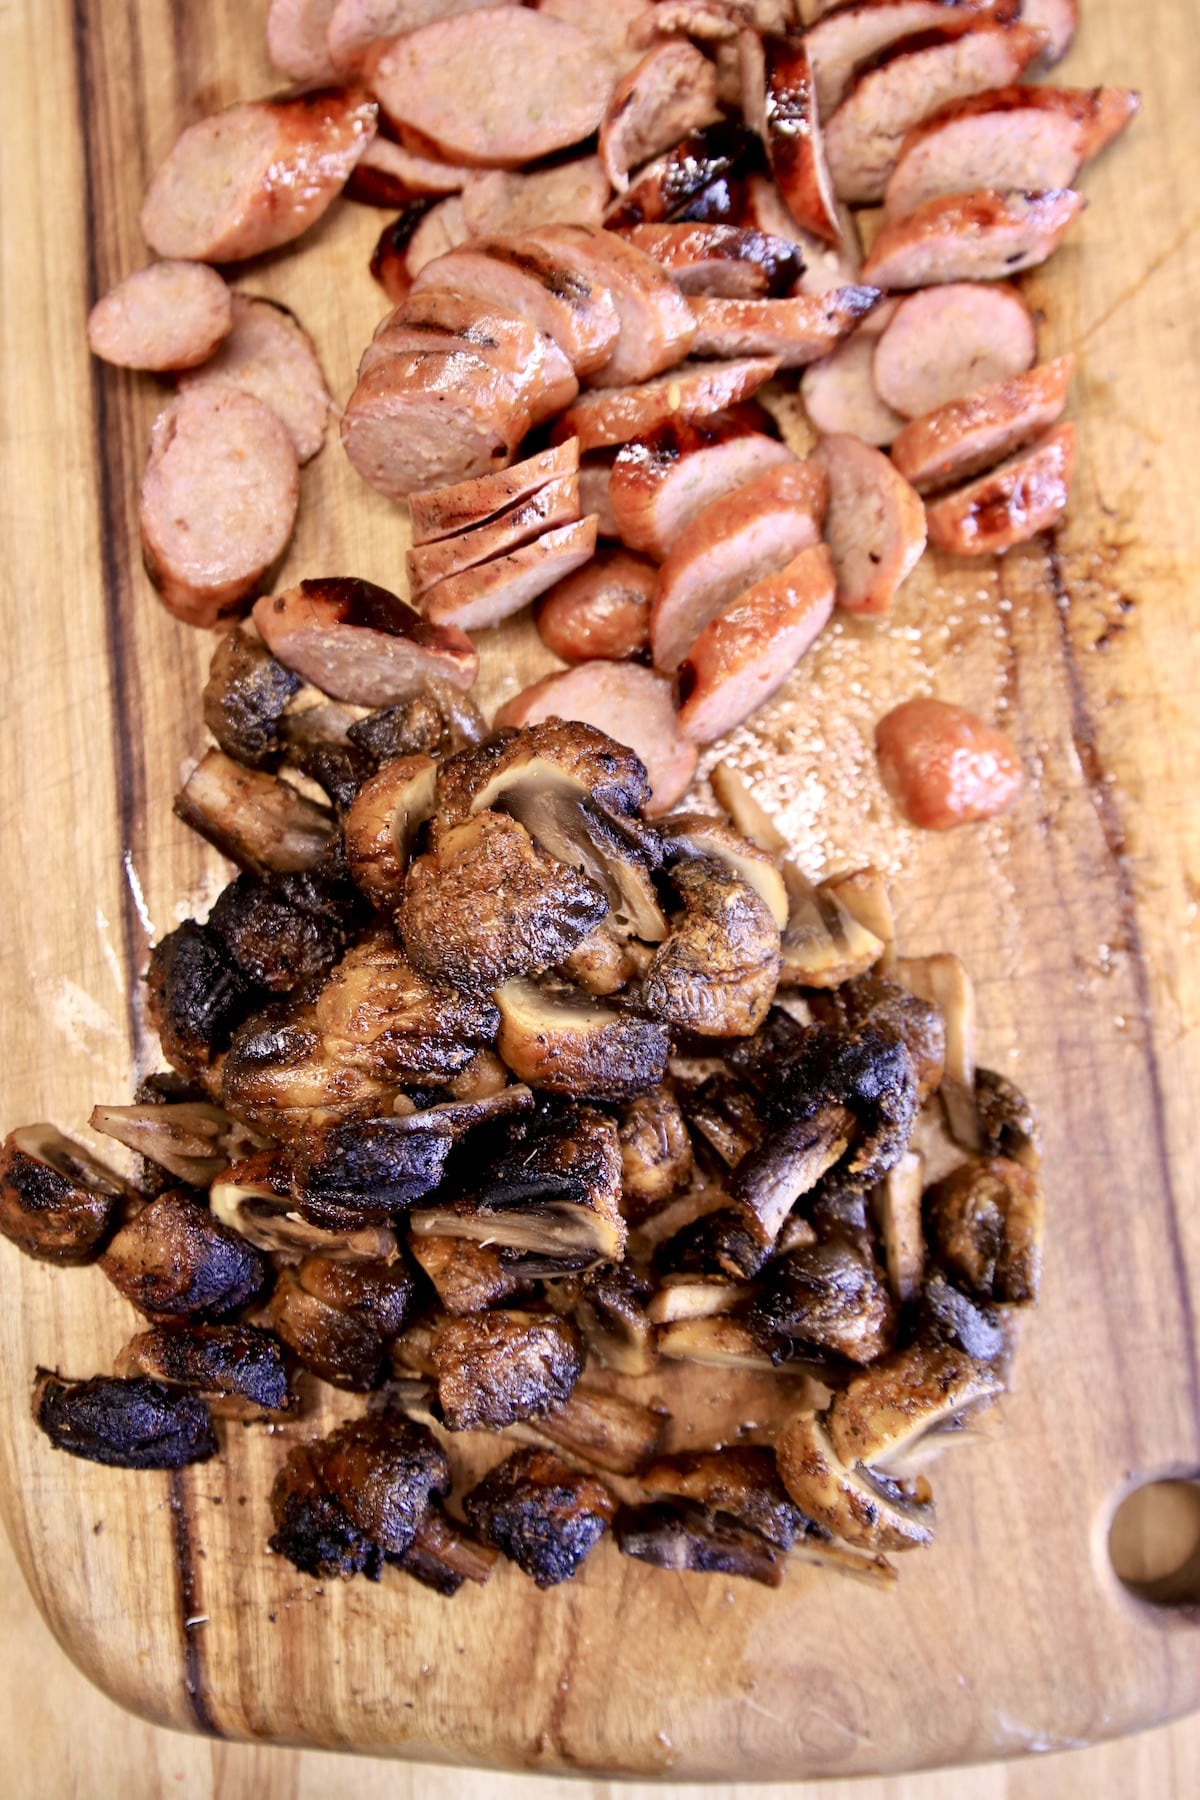 Sausage sliced, mushrooms on a cutting board.